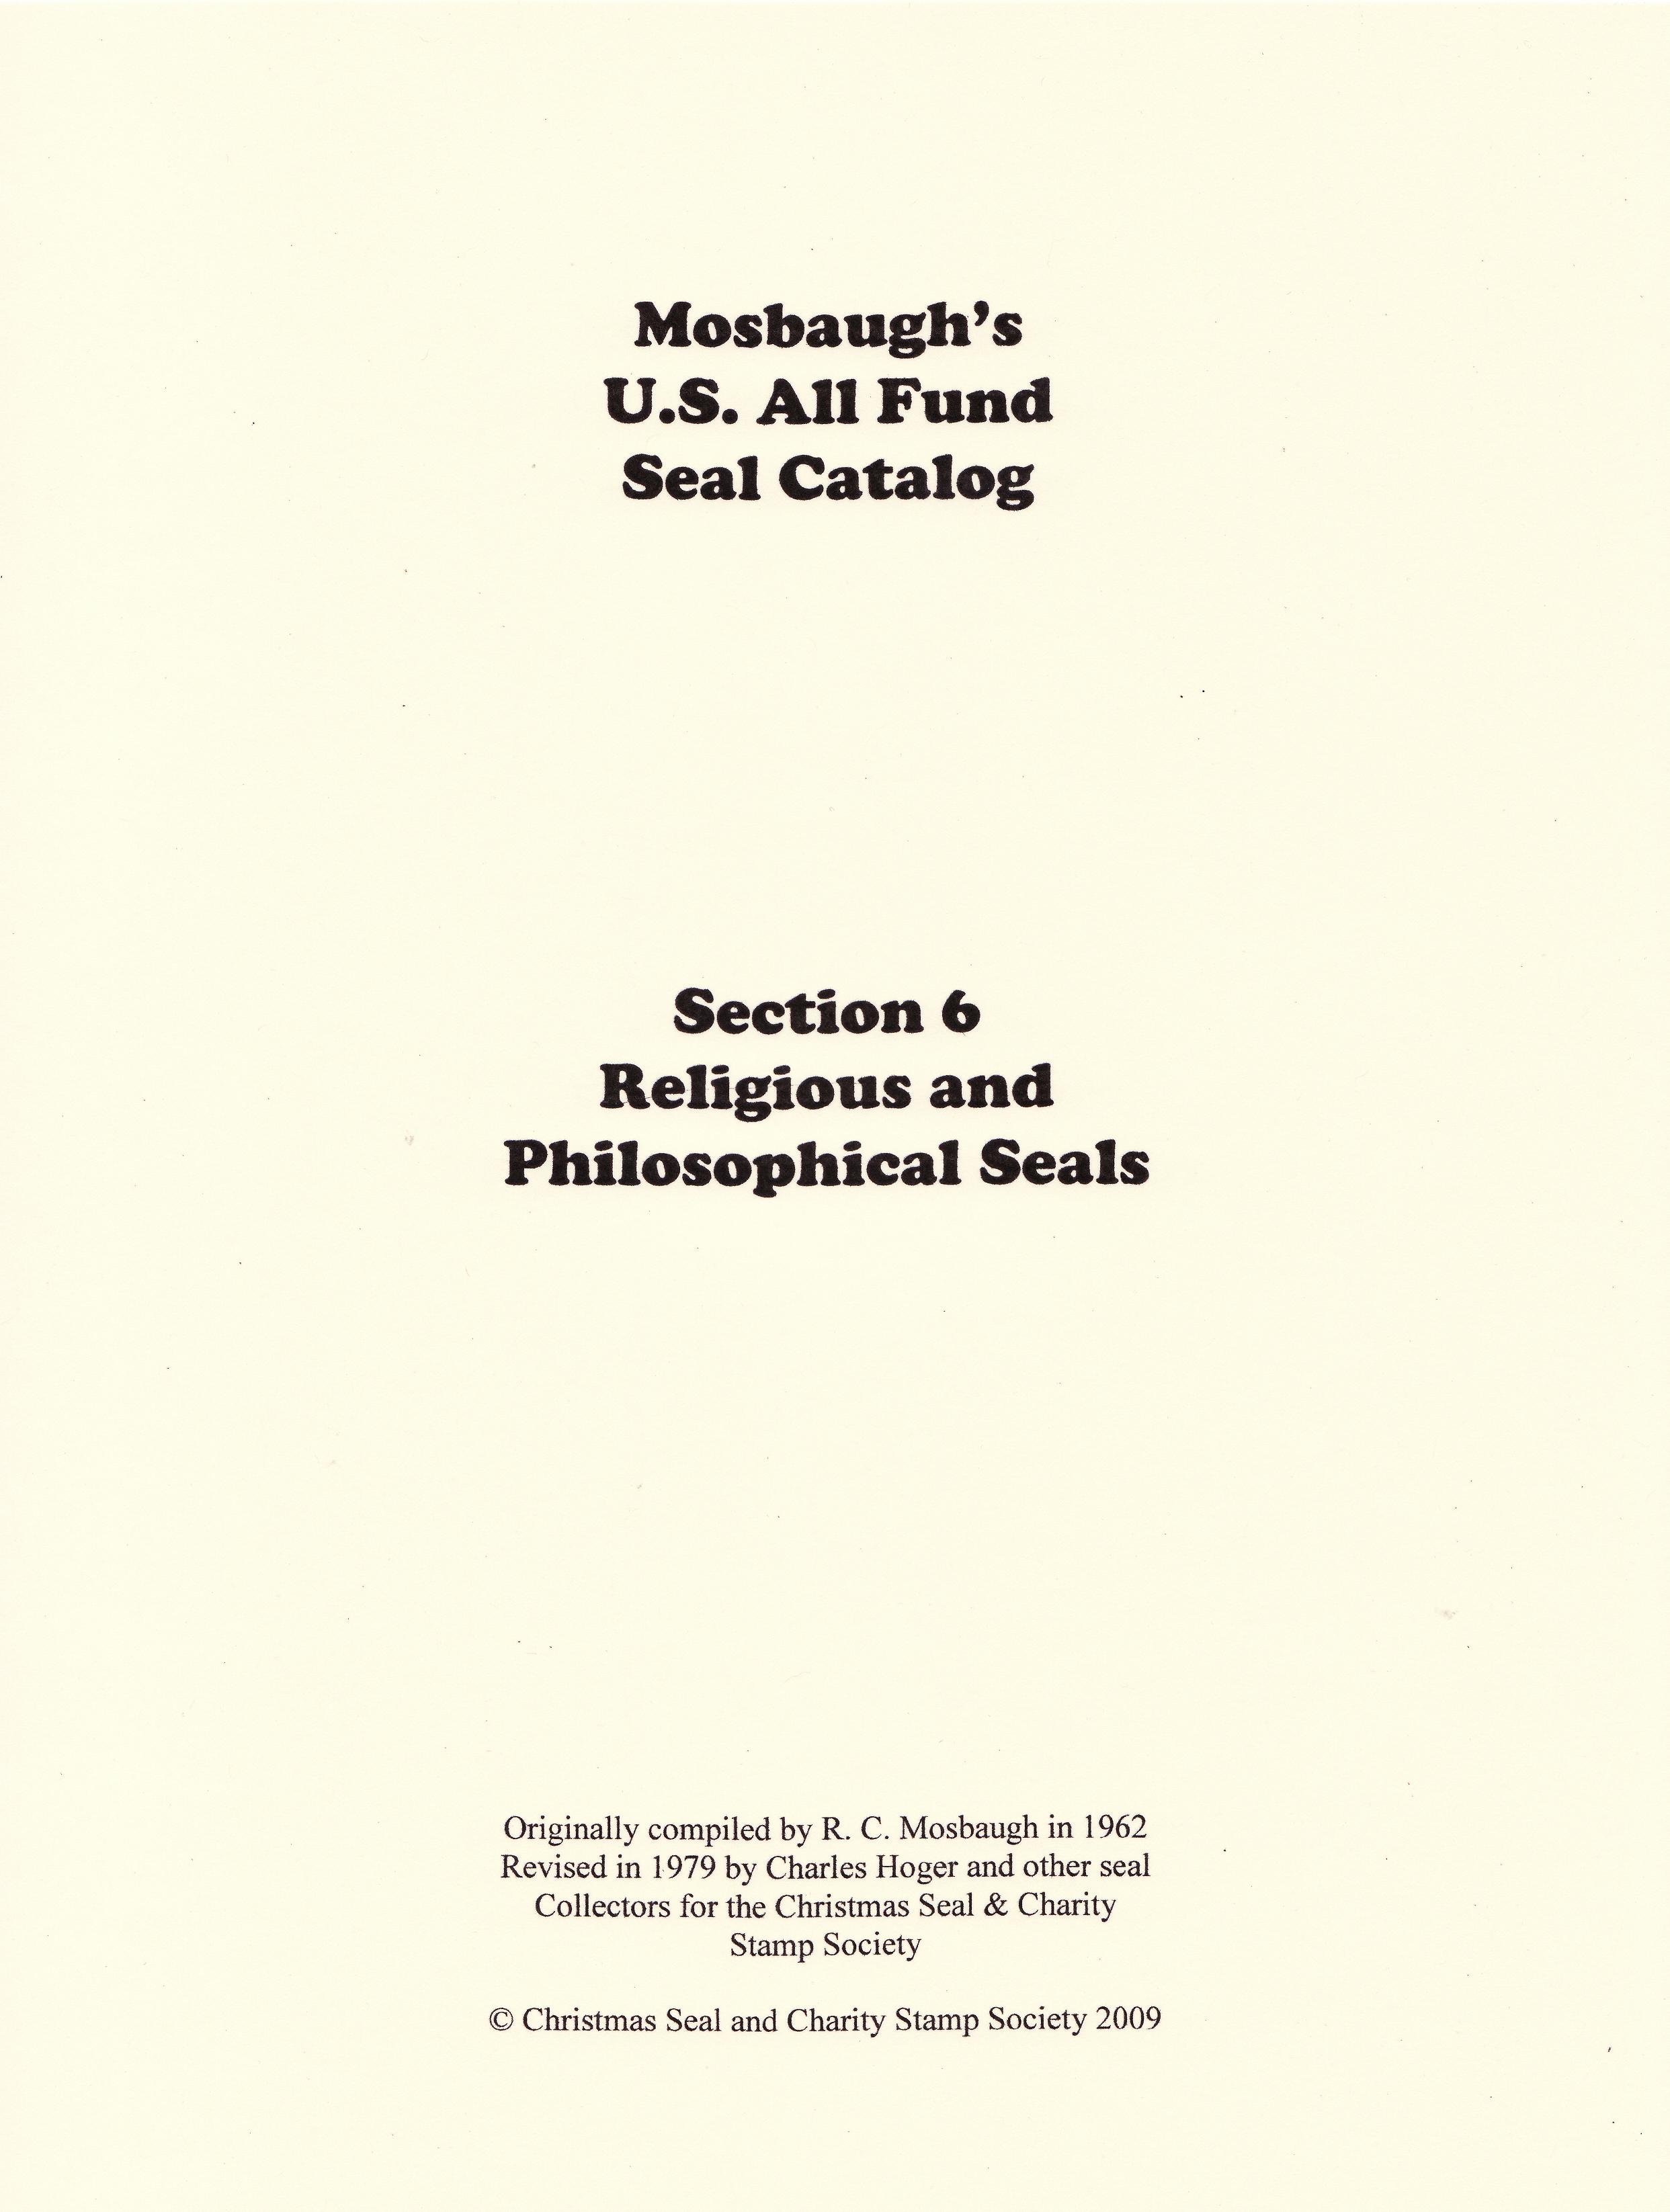 Mosbaugh's Catalog, Sec. 6. Religious & Philosophical Seals, 1962 ed., Rev. 1979